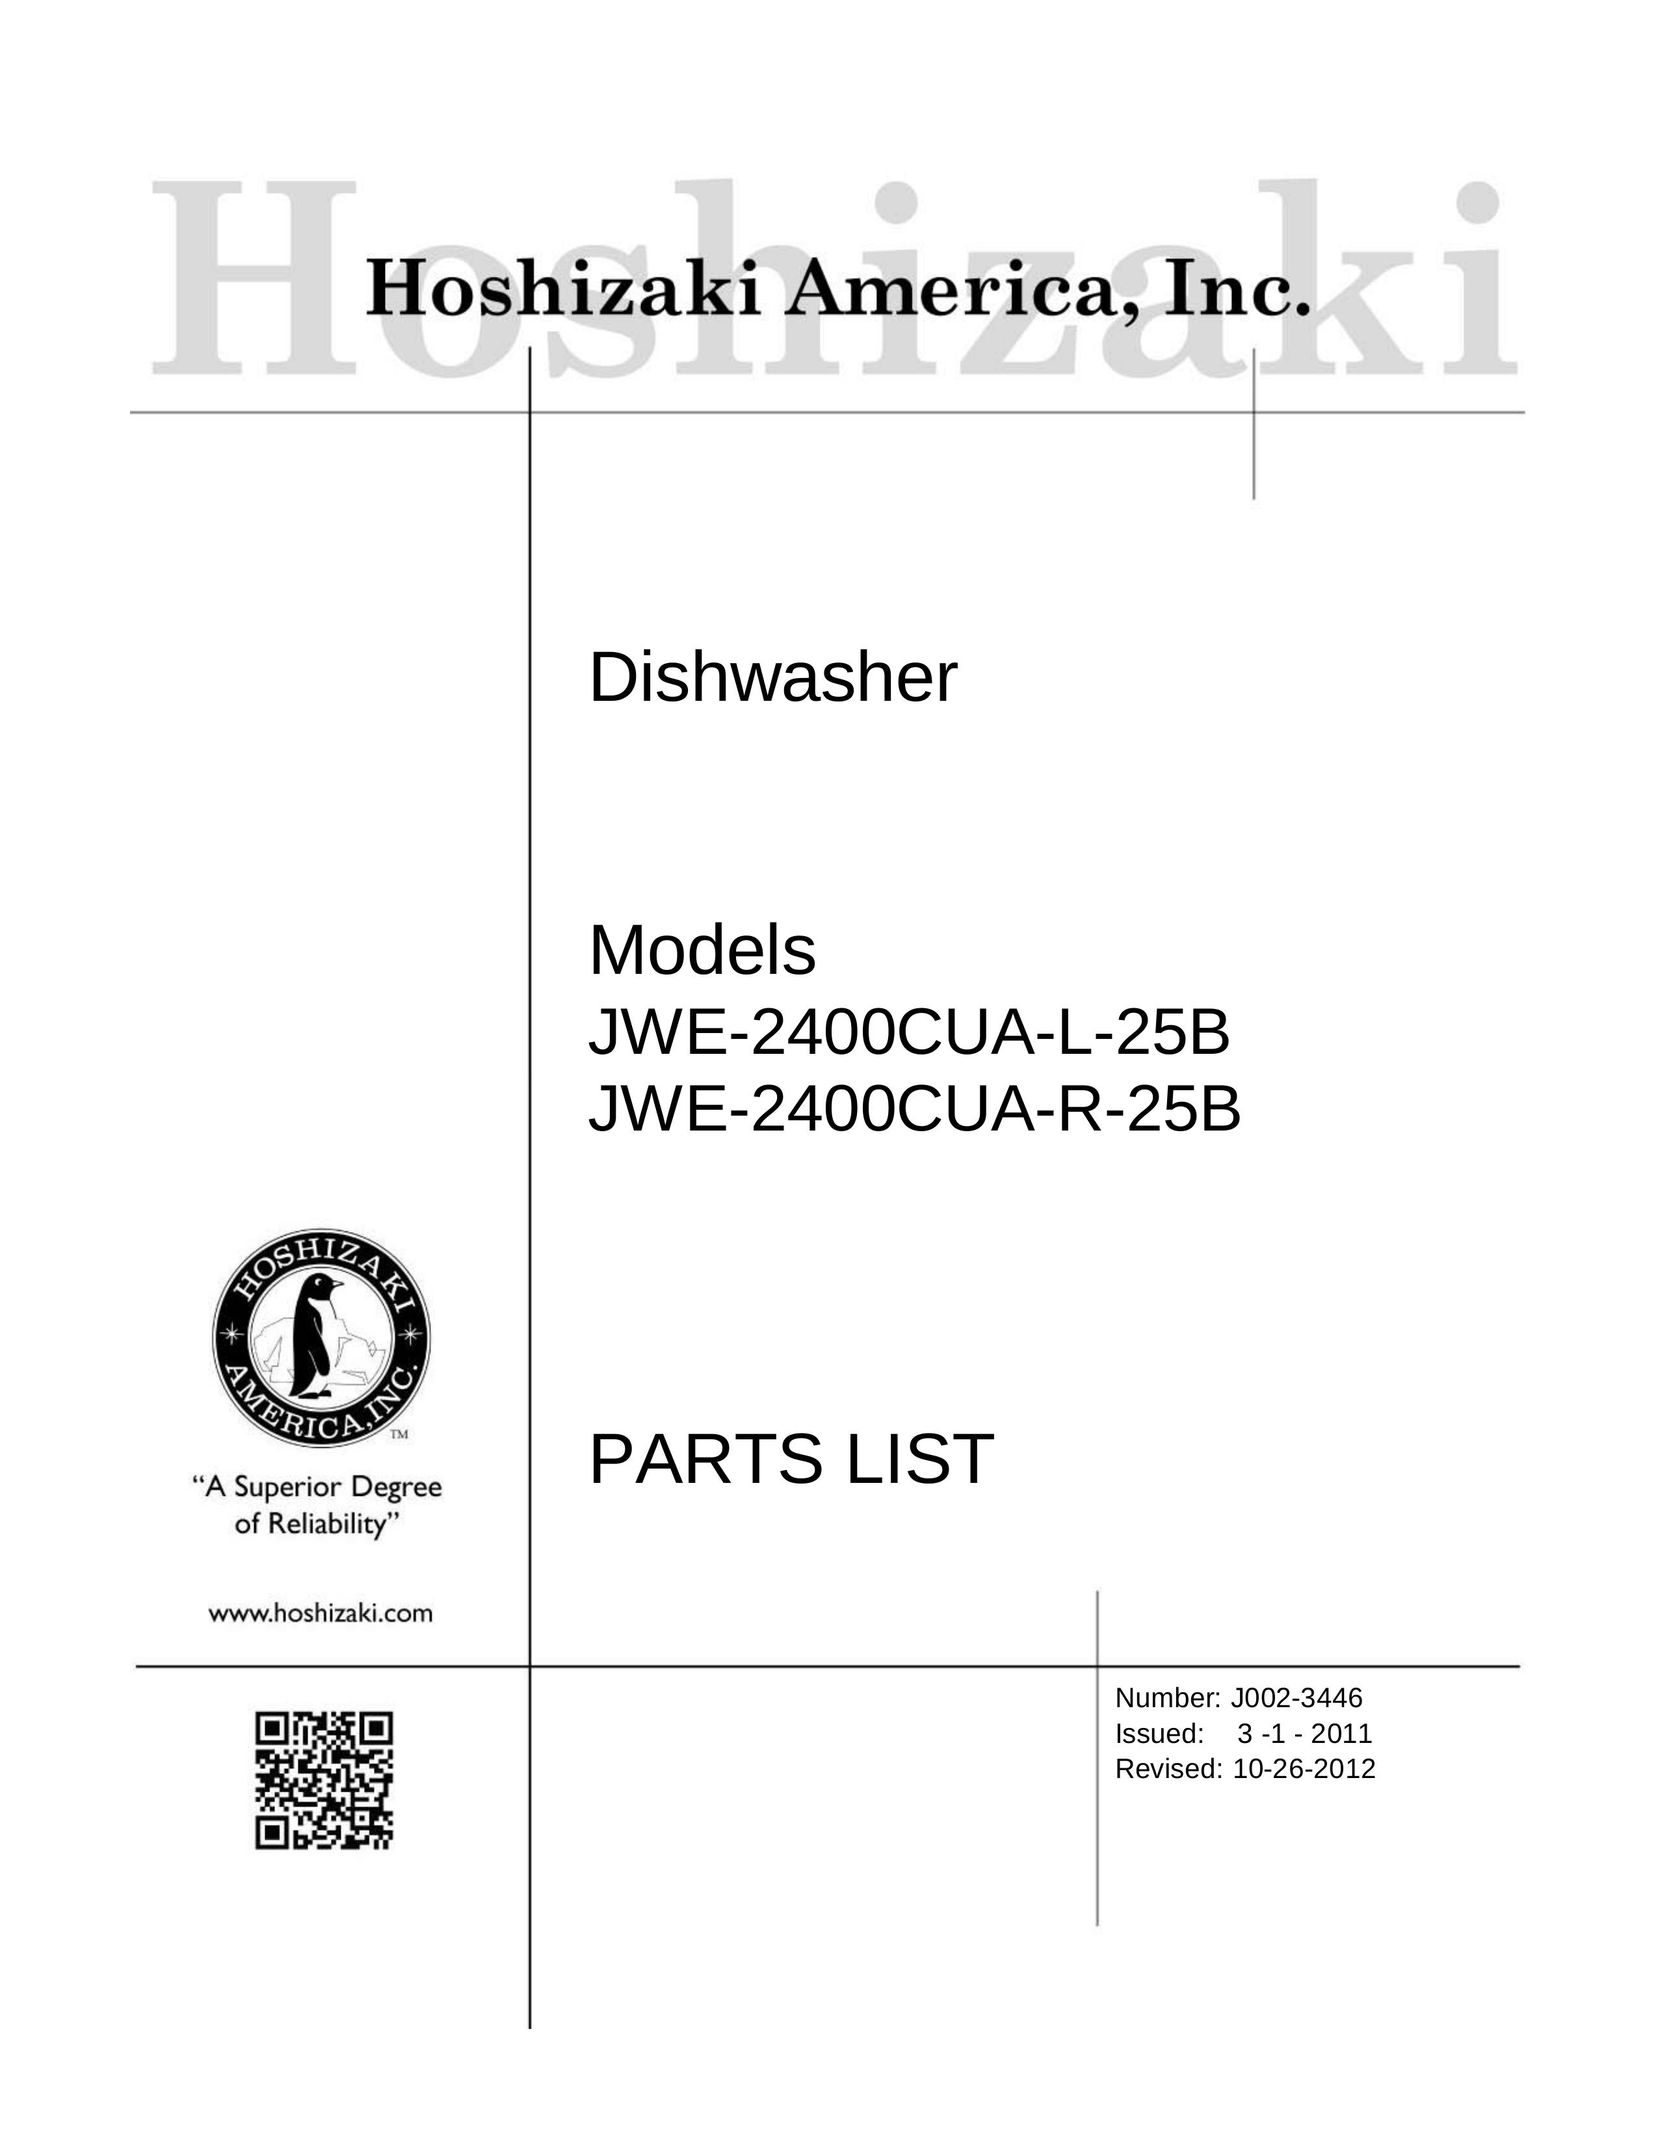 Hoshizaki JWE-2400CUA-L-25B Dishwasher User Manual